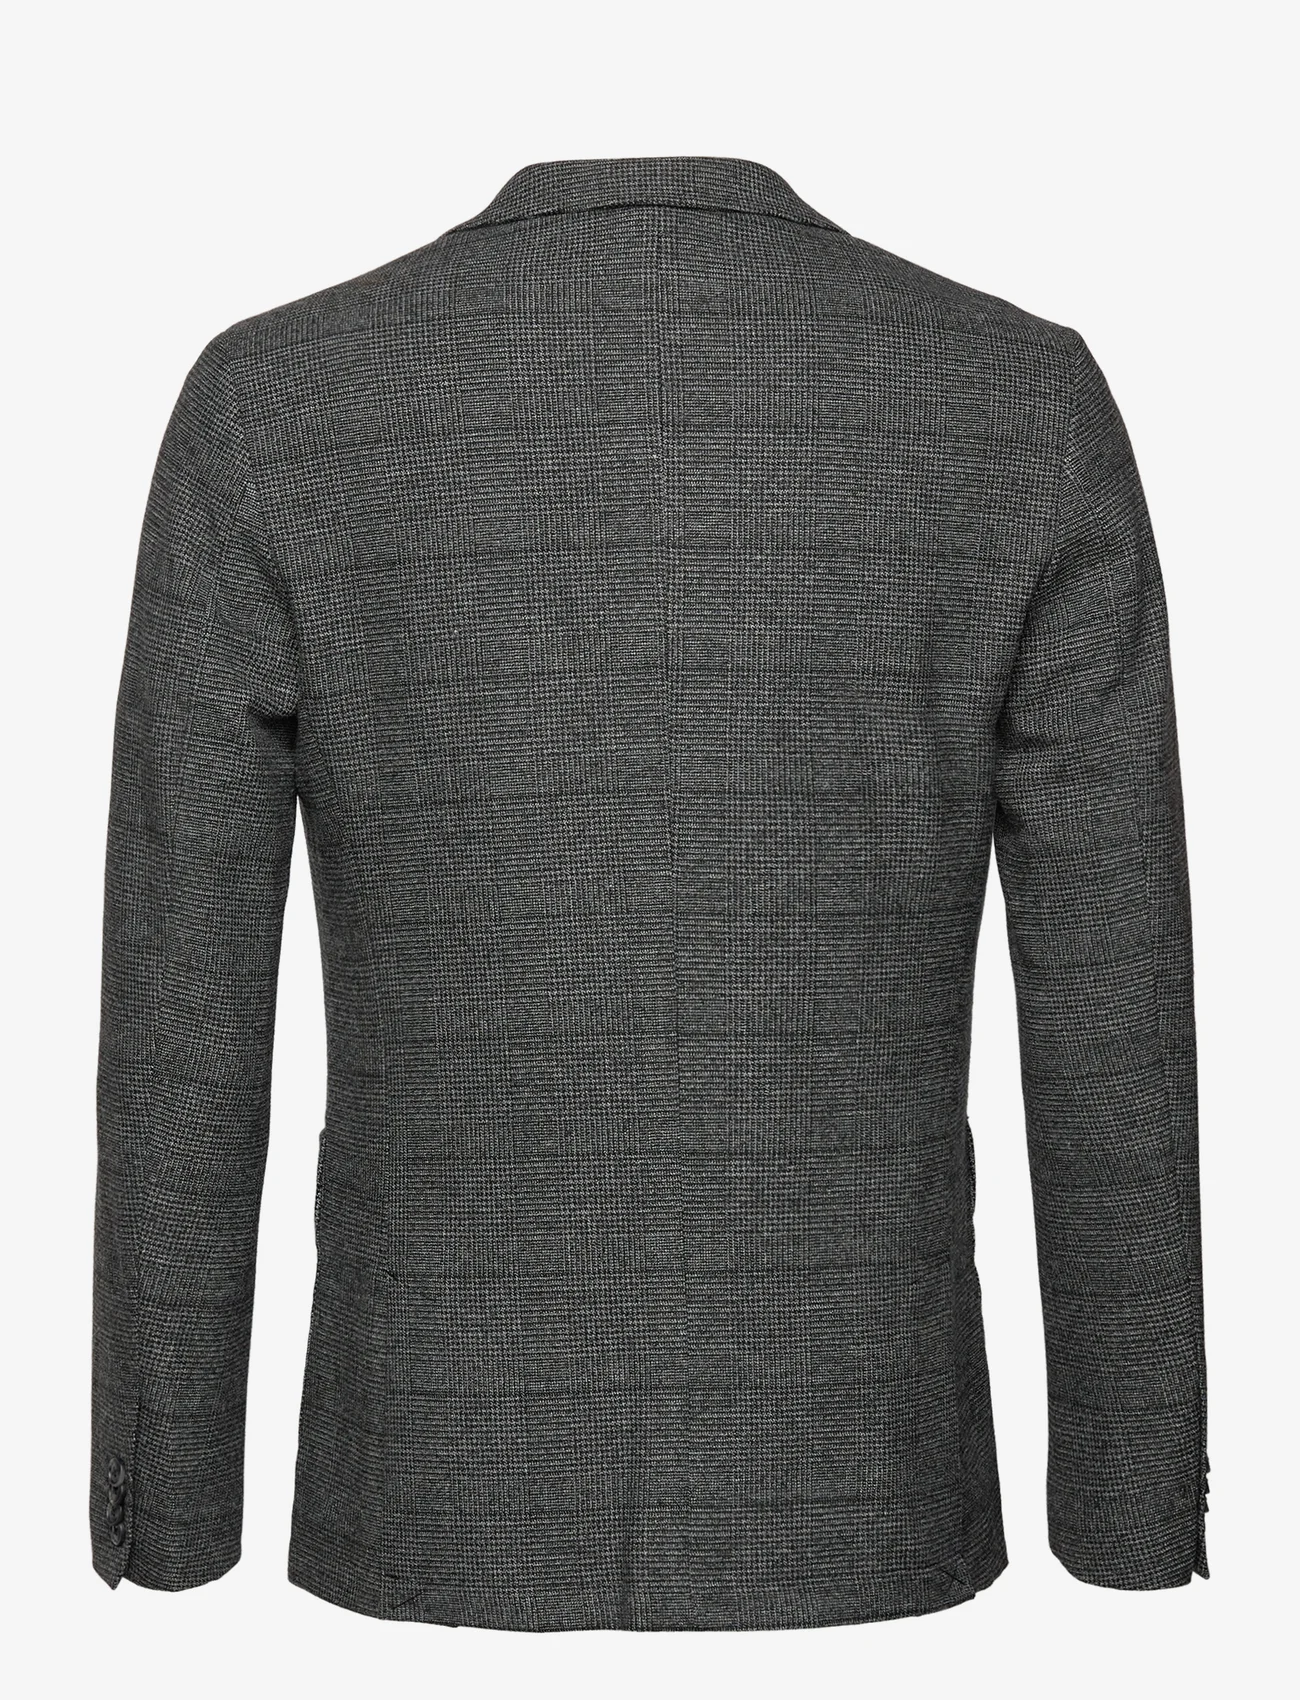 Tom Tailor - casual blazer - zweireiher - grey black grindle check - 1